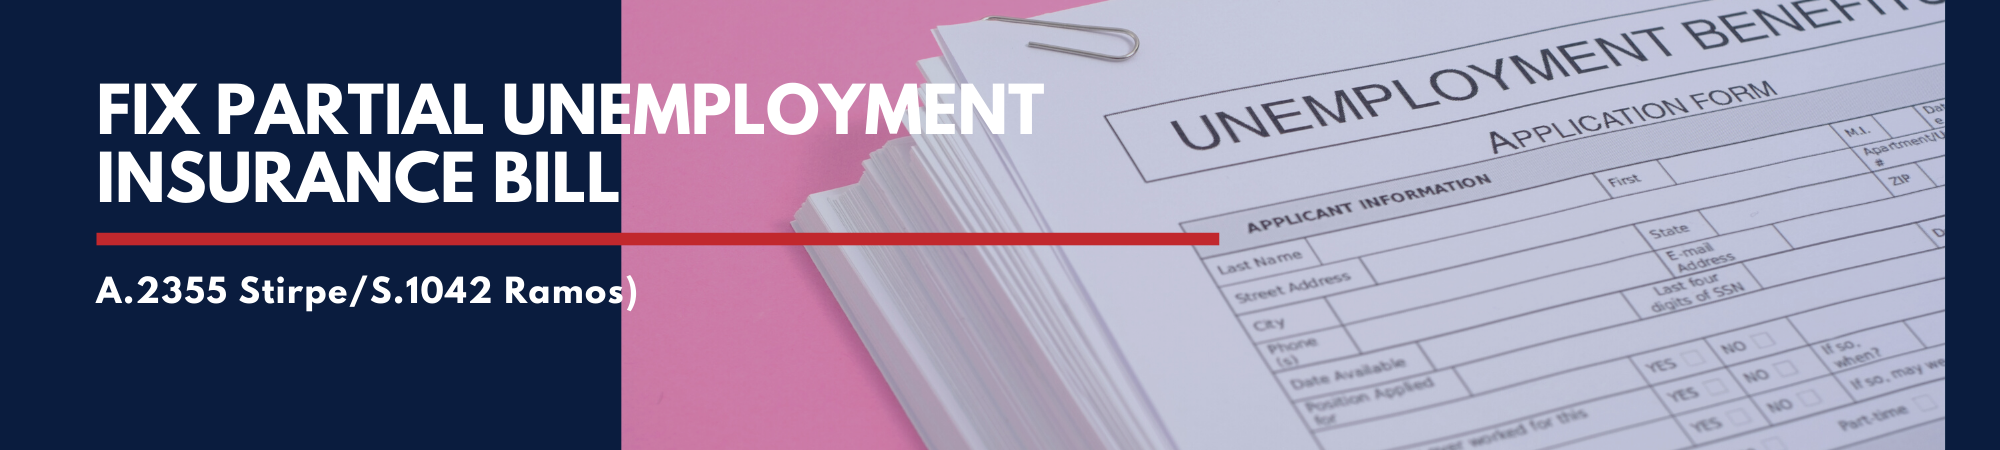 Graphic: Fix Partial Unemployment Insurance Bill (A.2355 Stirpe/S.1042 Ramos)